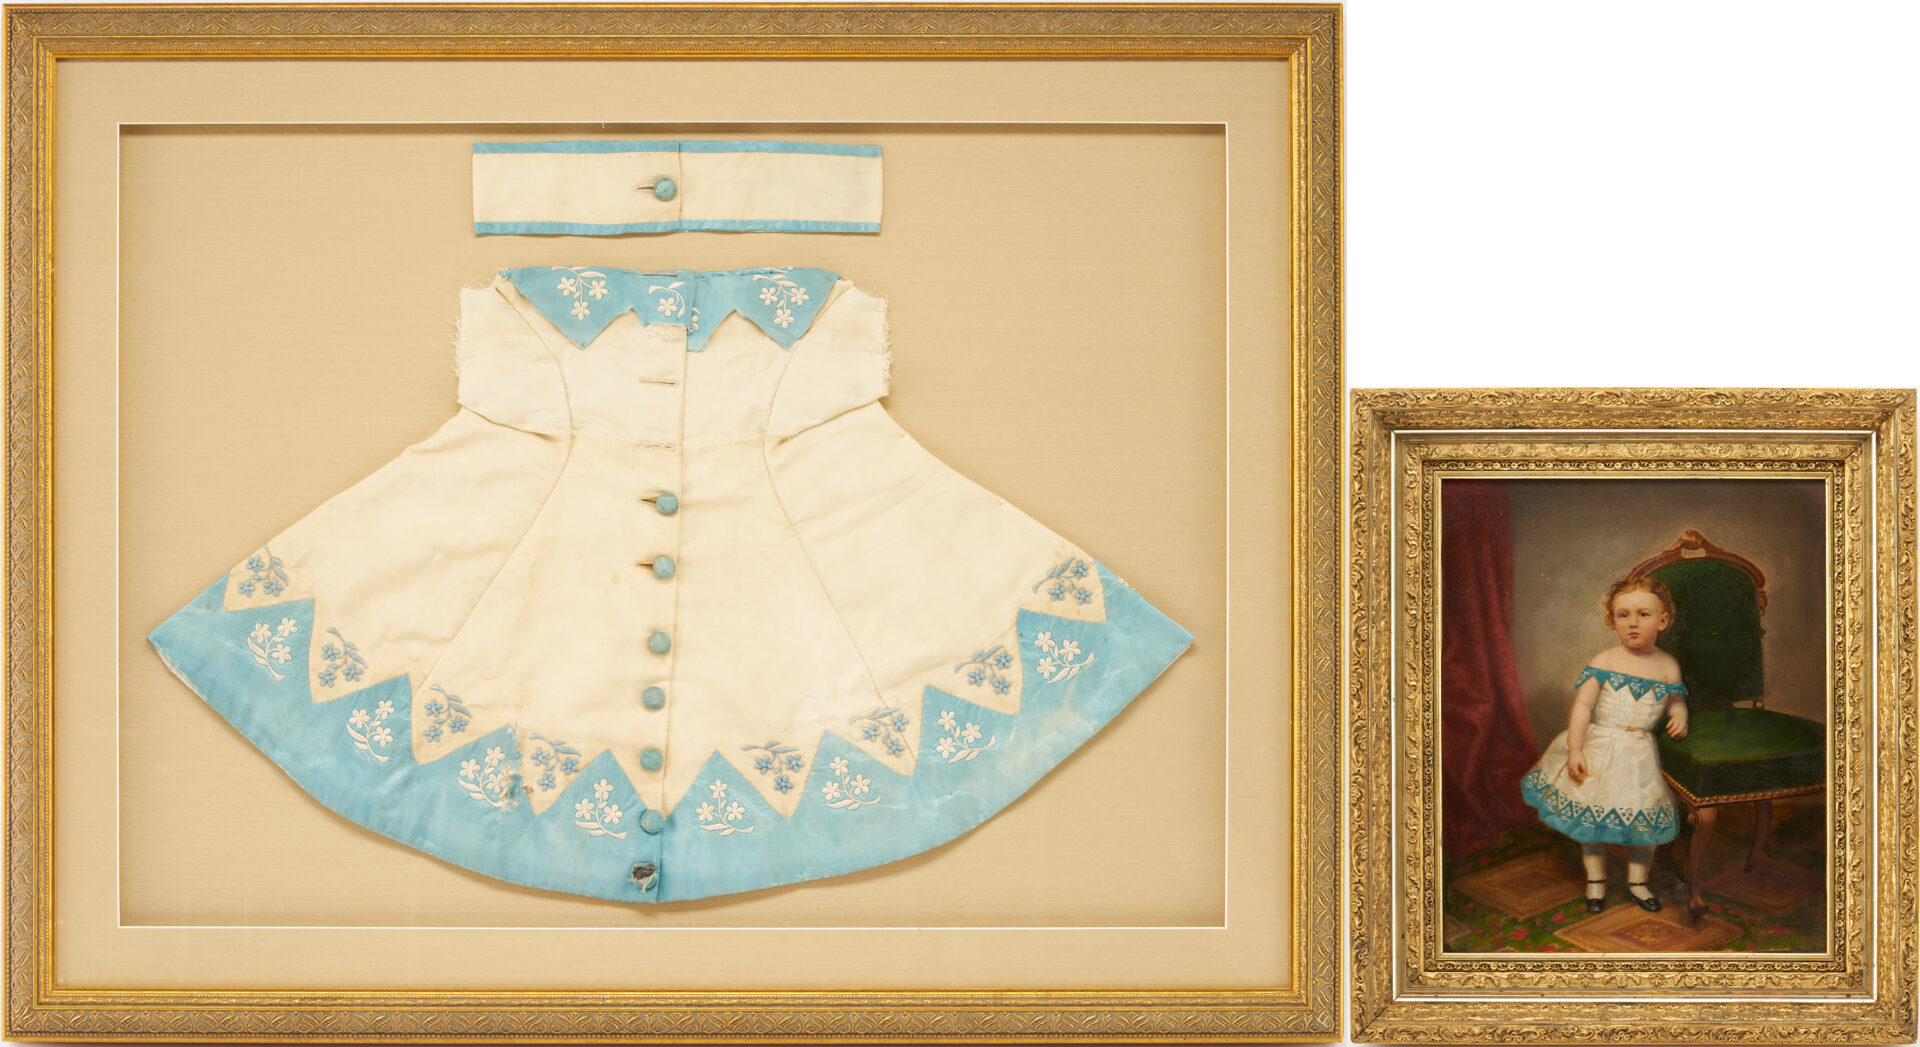 Lot 333: Eastman Johnson Oil Portrait of a Child, plus same Dress worn in Portrait